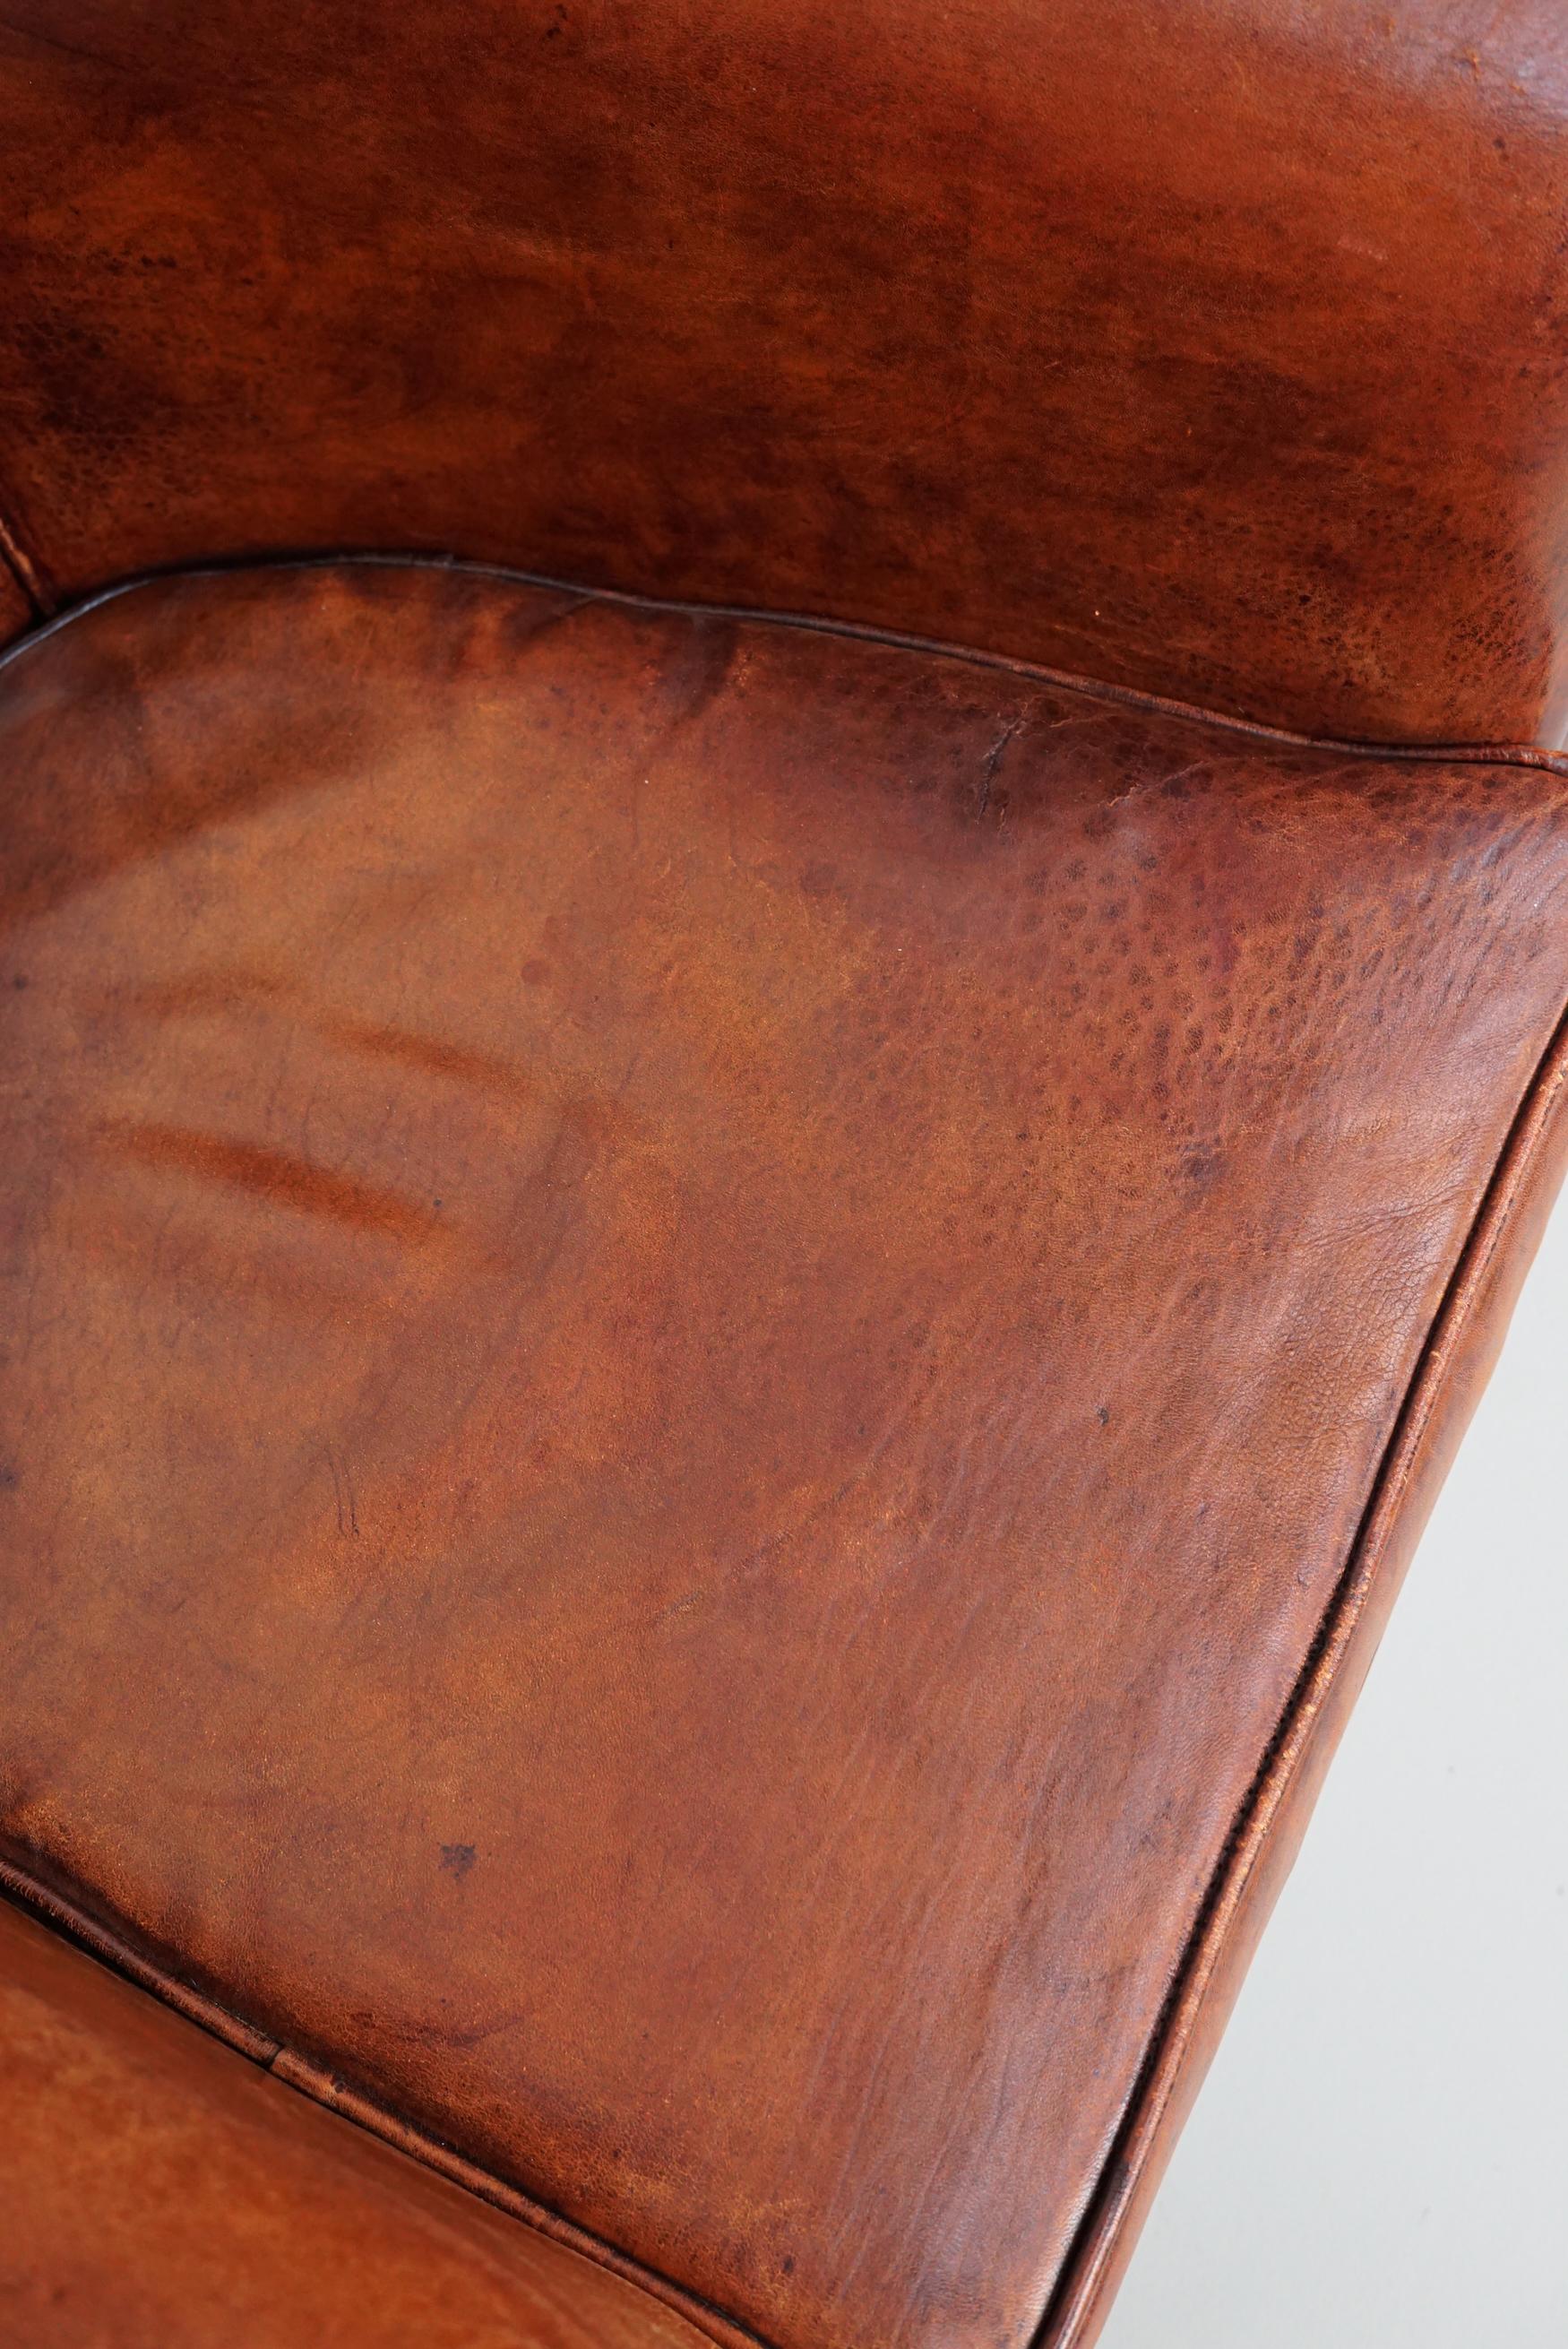 Vintage Dutch Cognac Colored Leather Club Chair, Set of 2 1